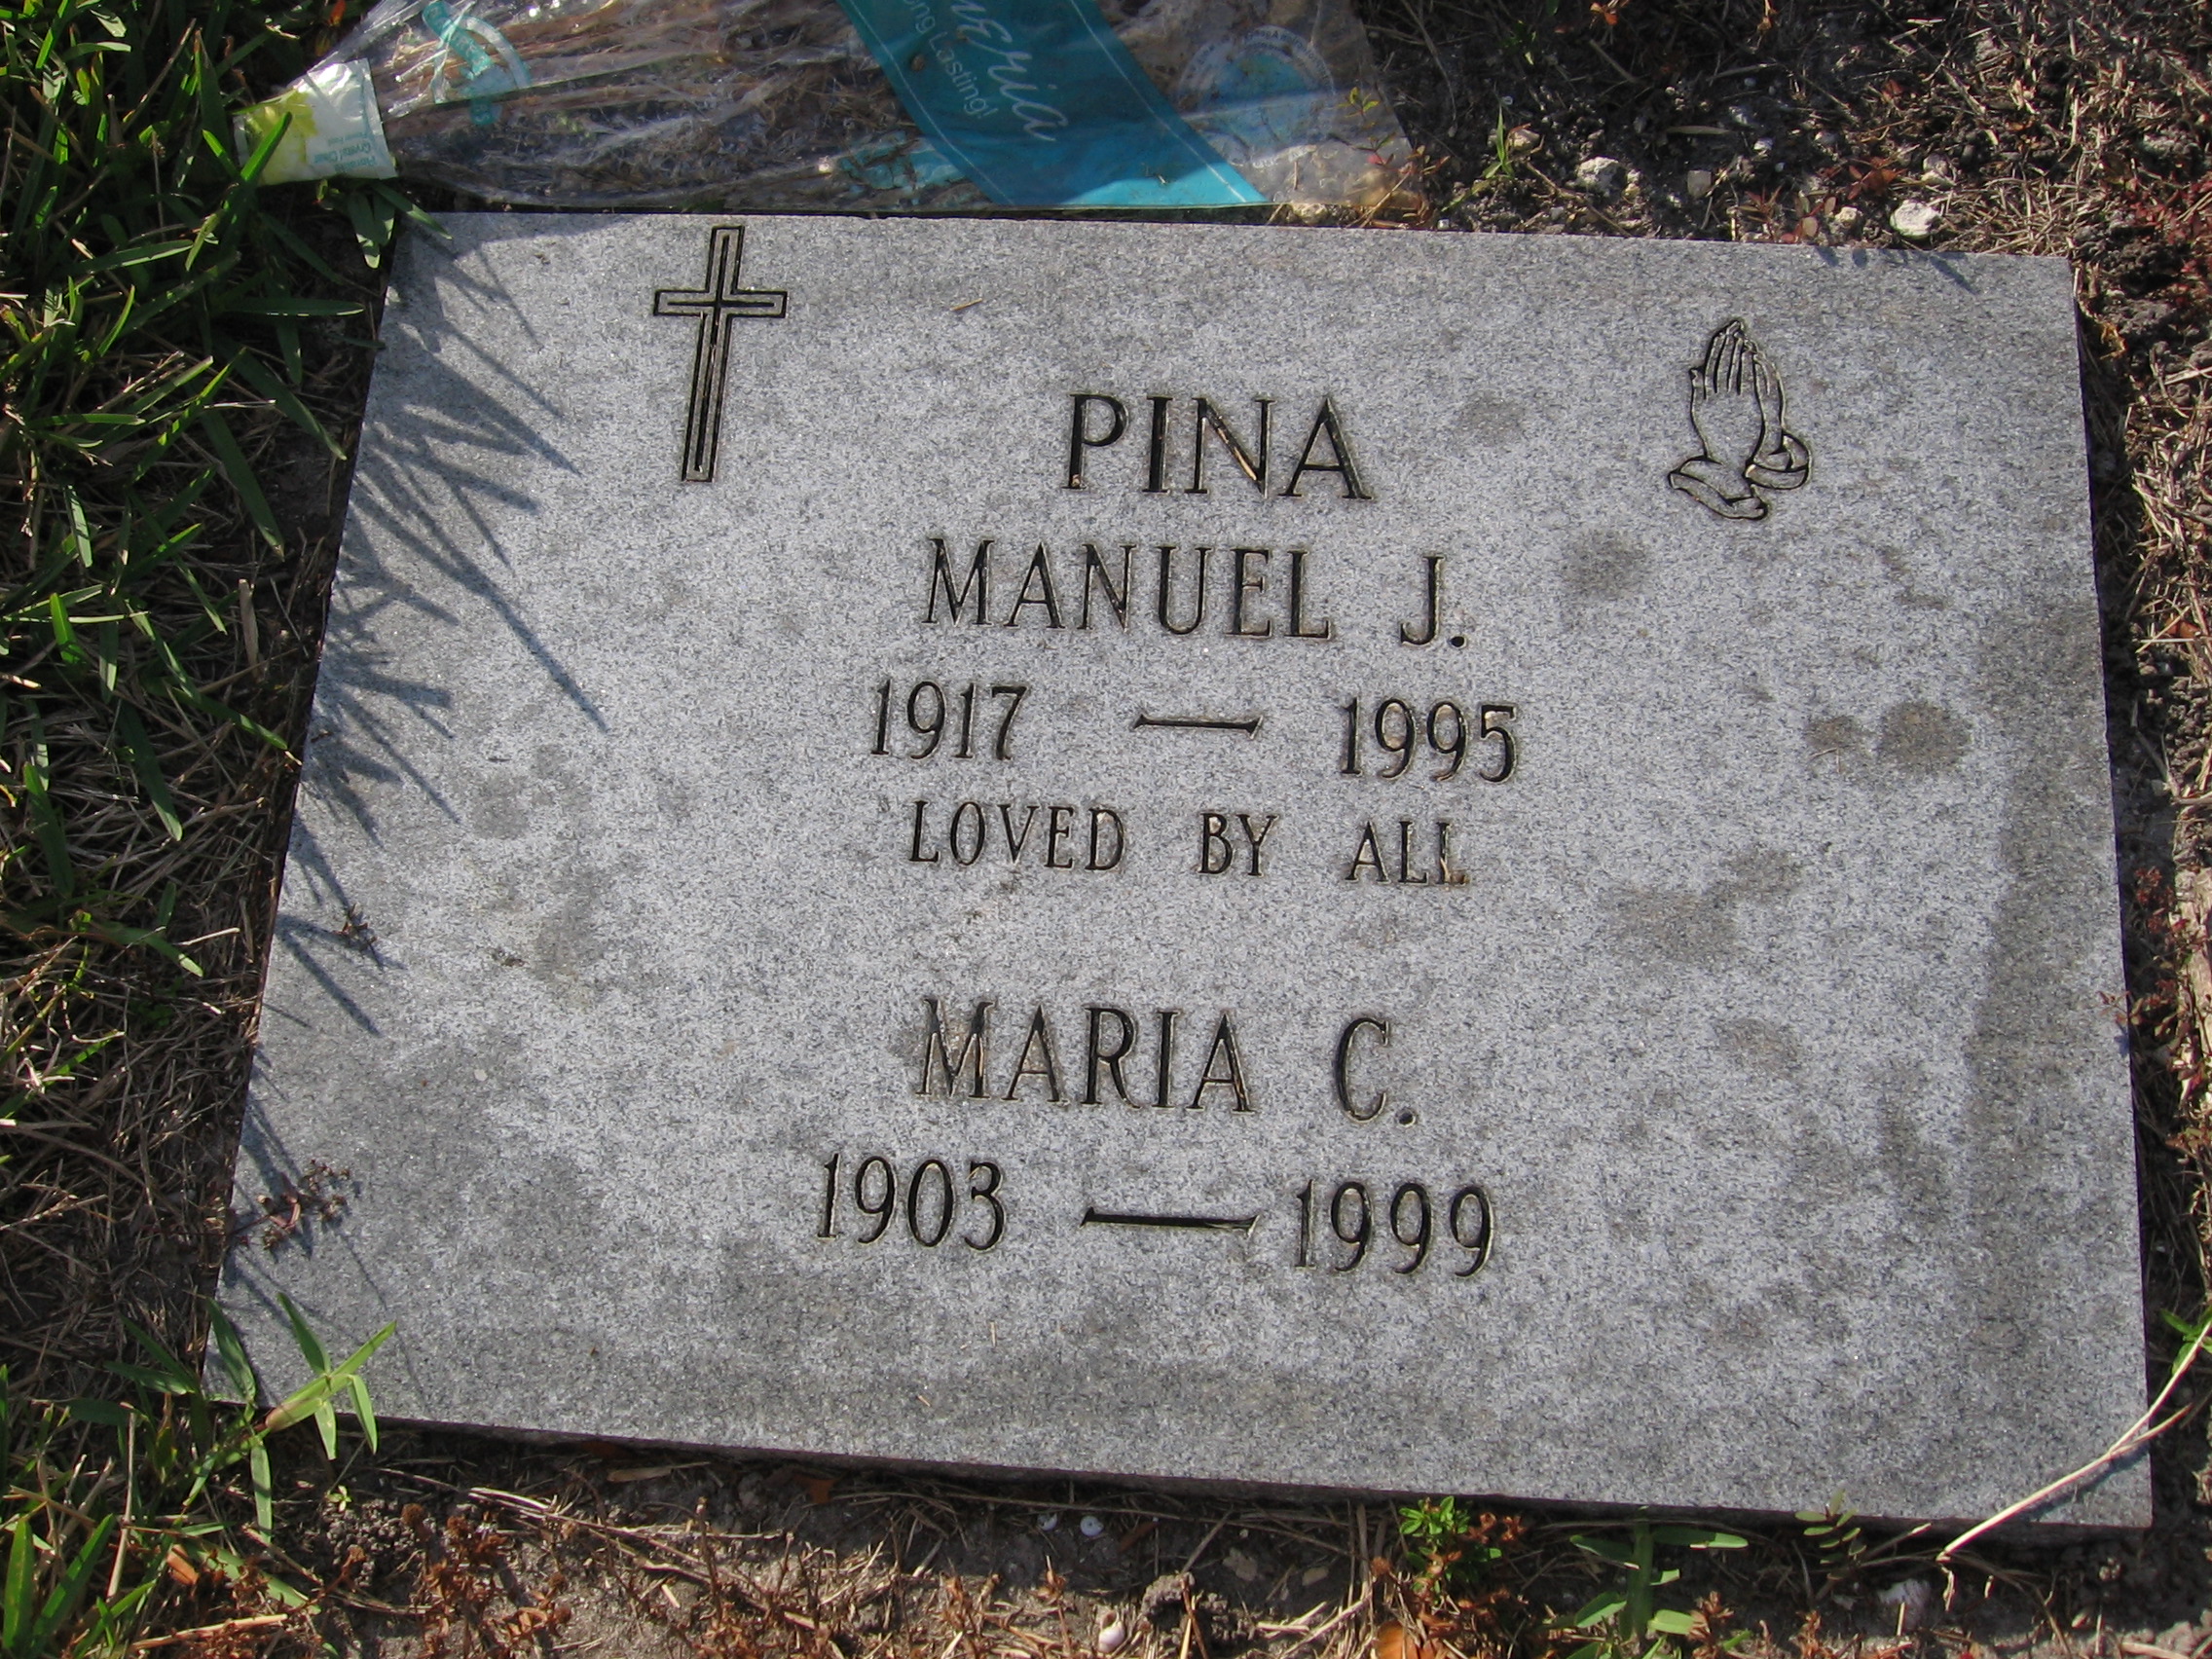 Manuel J Pina